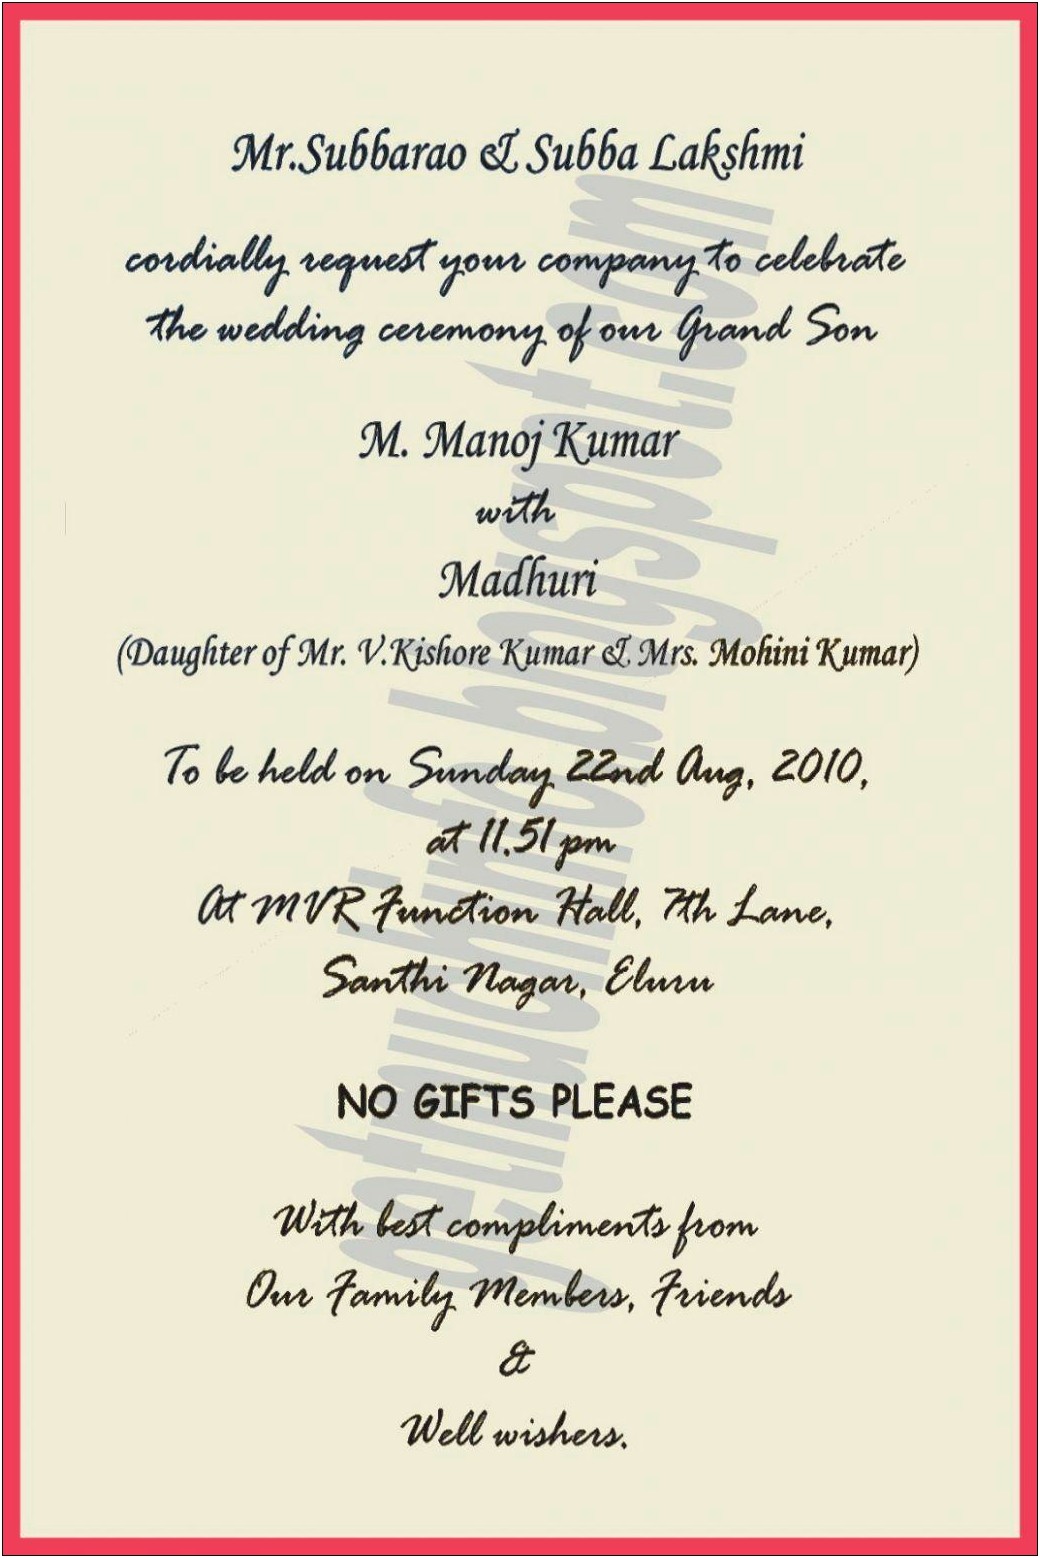 Kannada Wedding Invitation Matter For Friends